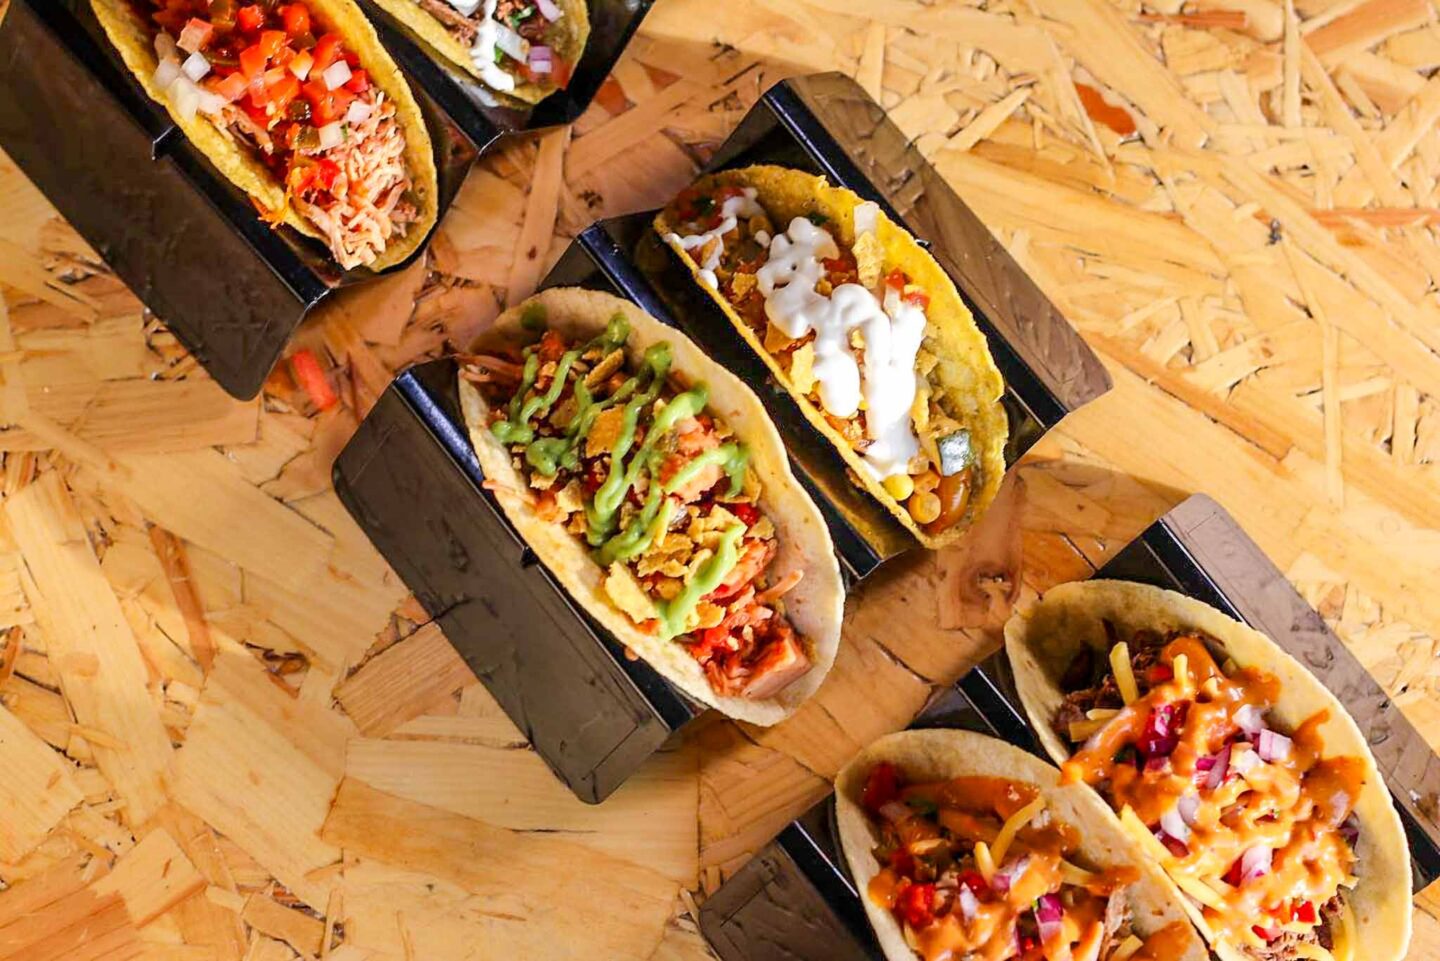 halal food in altrincam, tacos from Burrito Picante in Altrincham